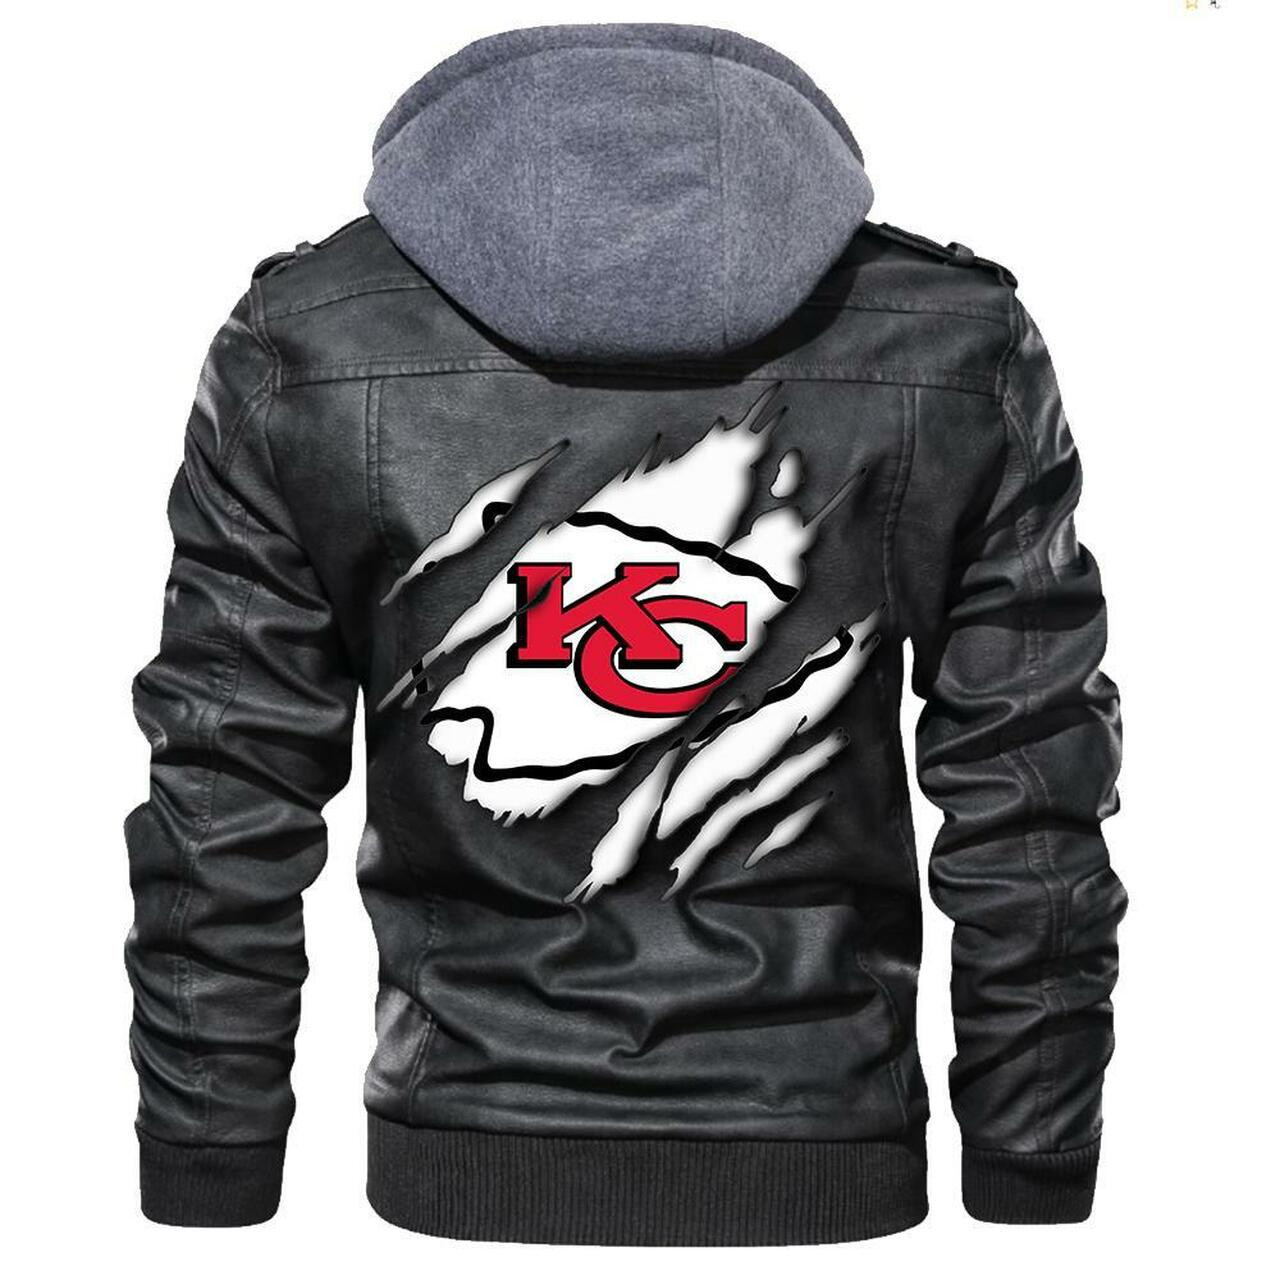 Top leather jacket Sells Best on Techcomshop 138